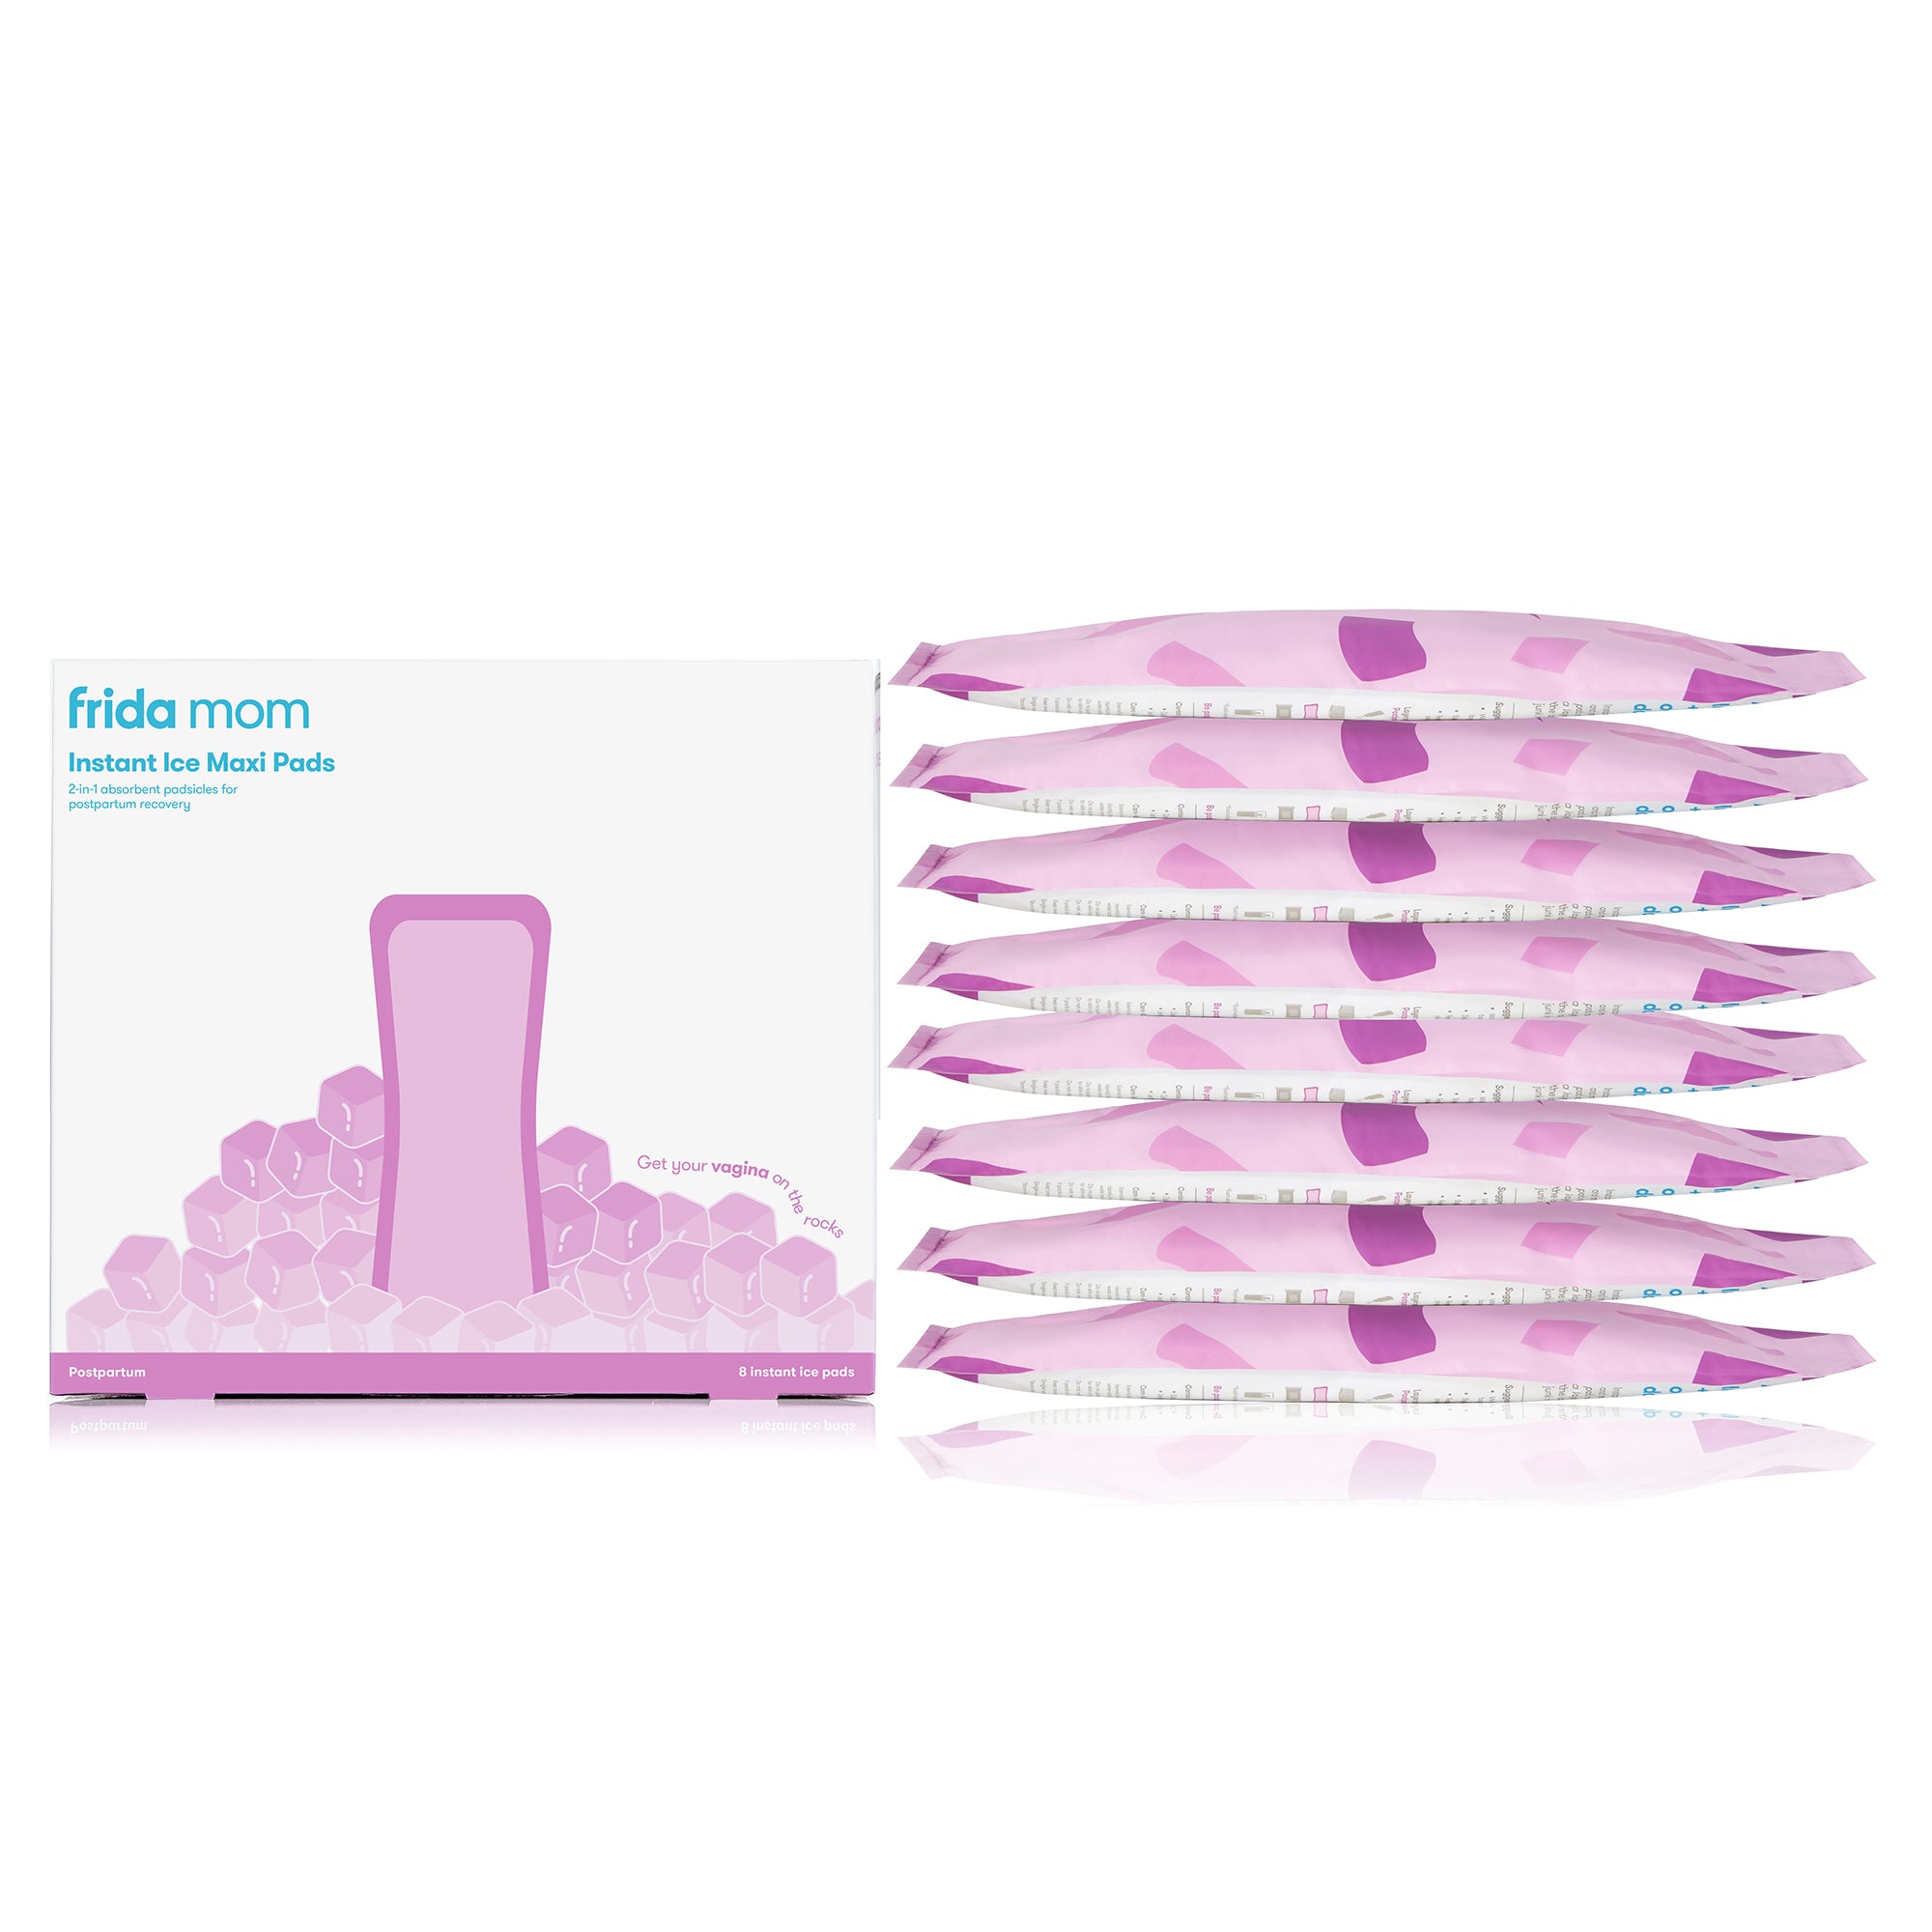 Frida Mom Instant Ice Maxi Pads for Postpartum Care